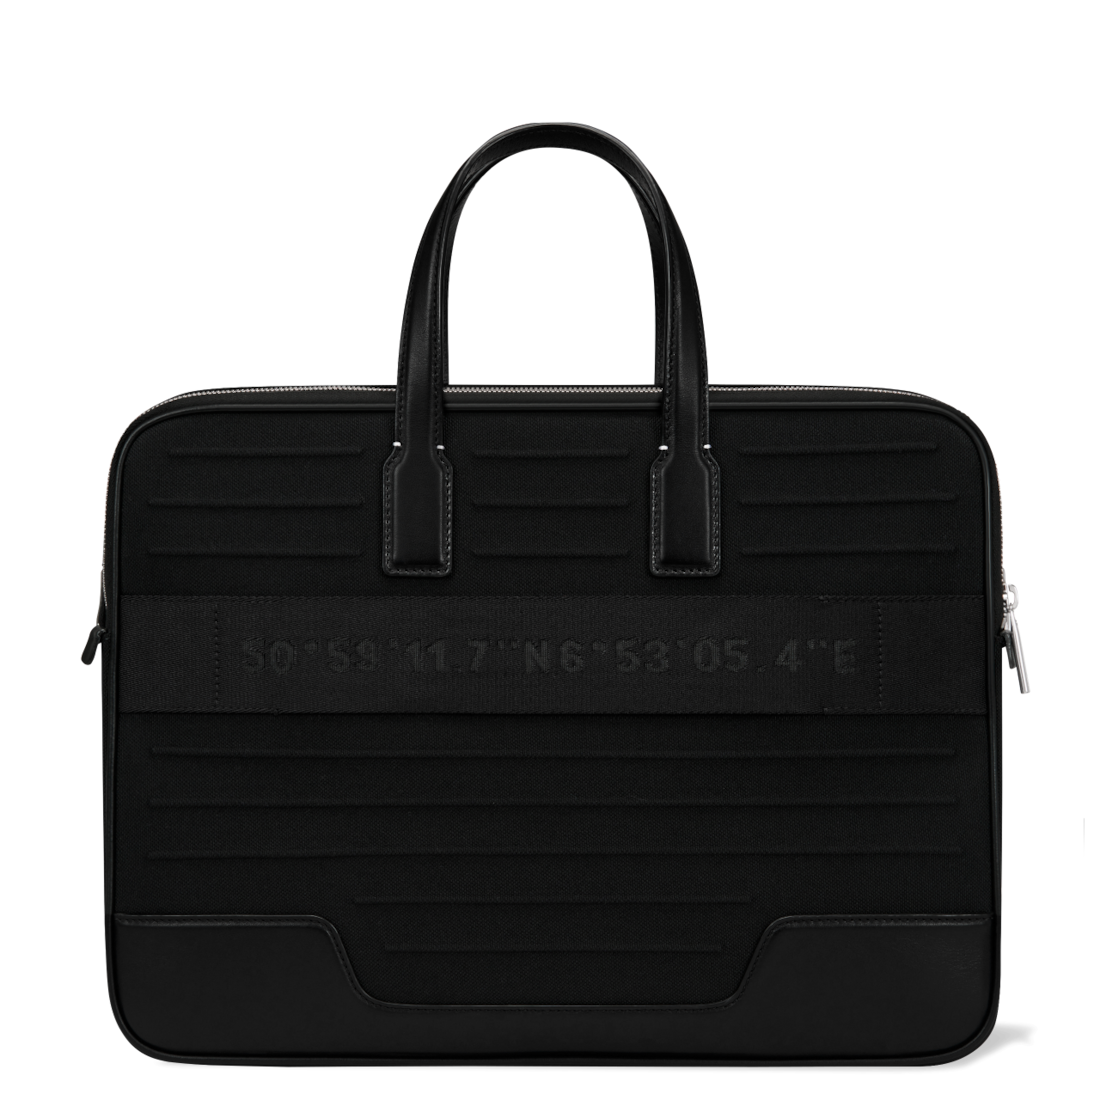 Briefcase in Leather & Canvas | Black | RIMOWA